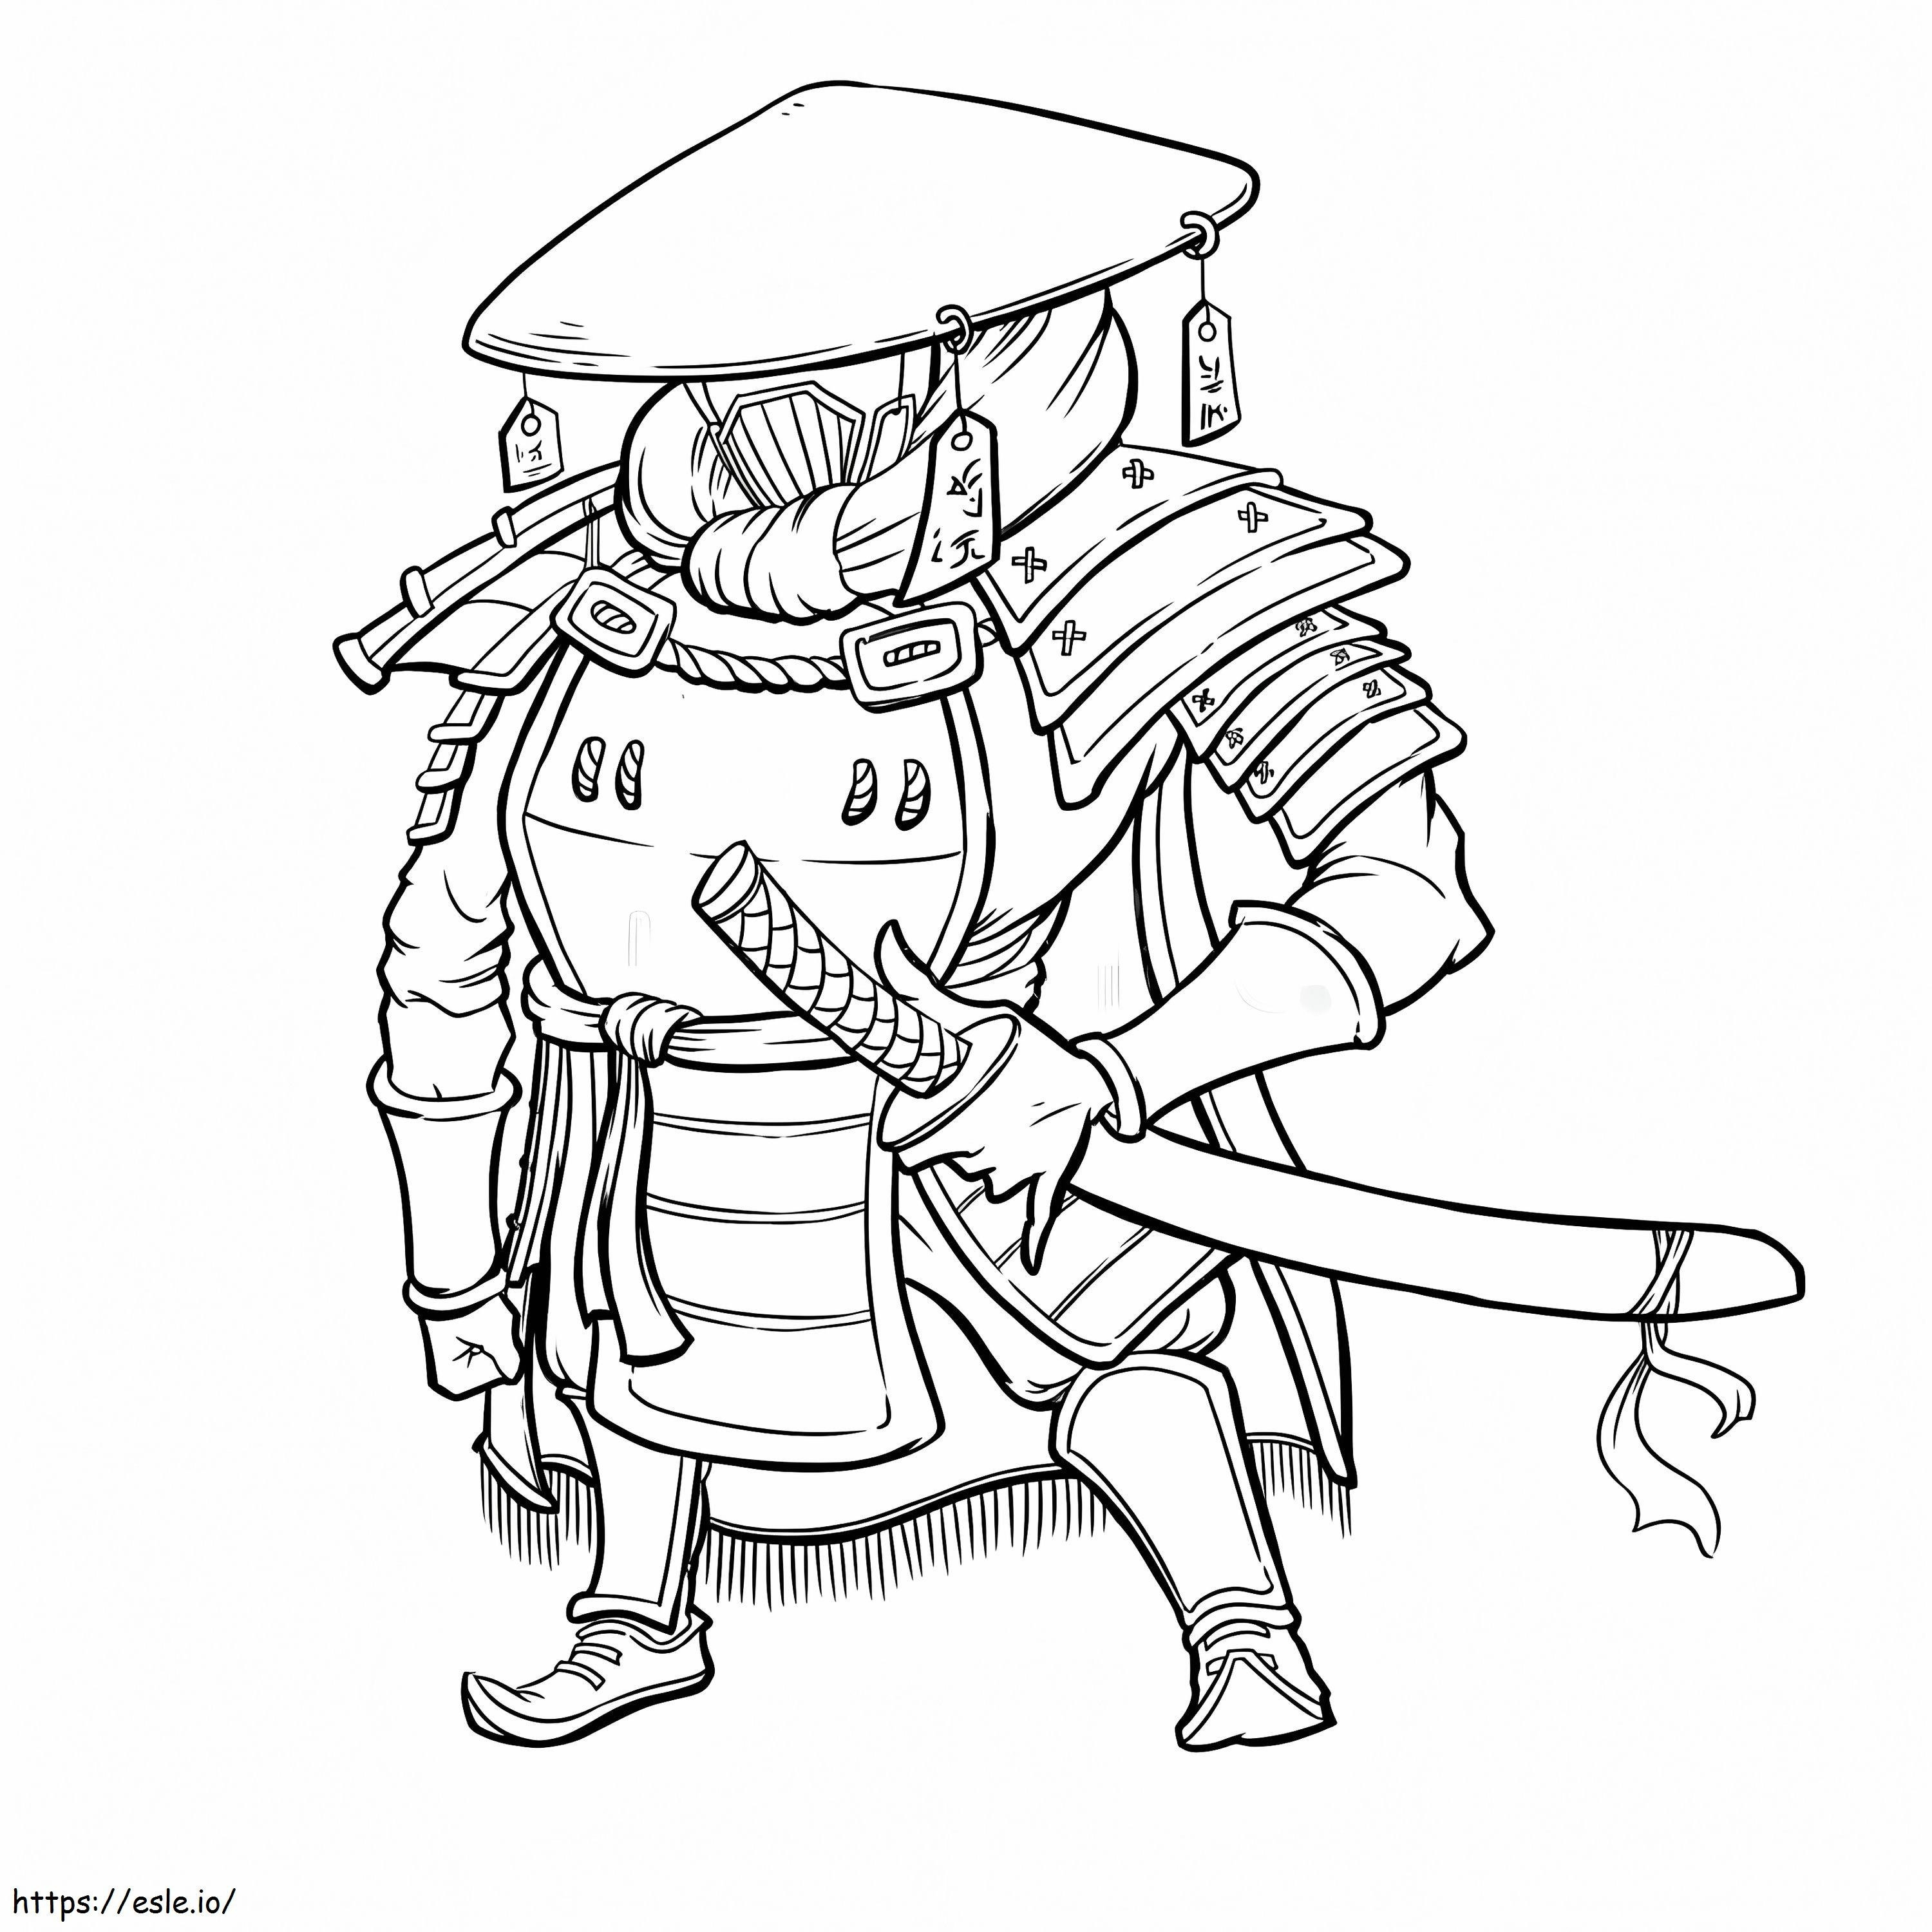 Guerrero Samurai 1 coloring page